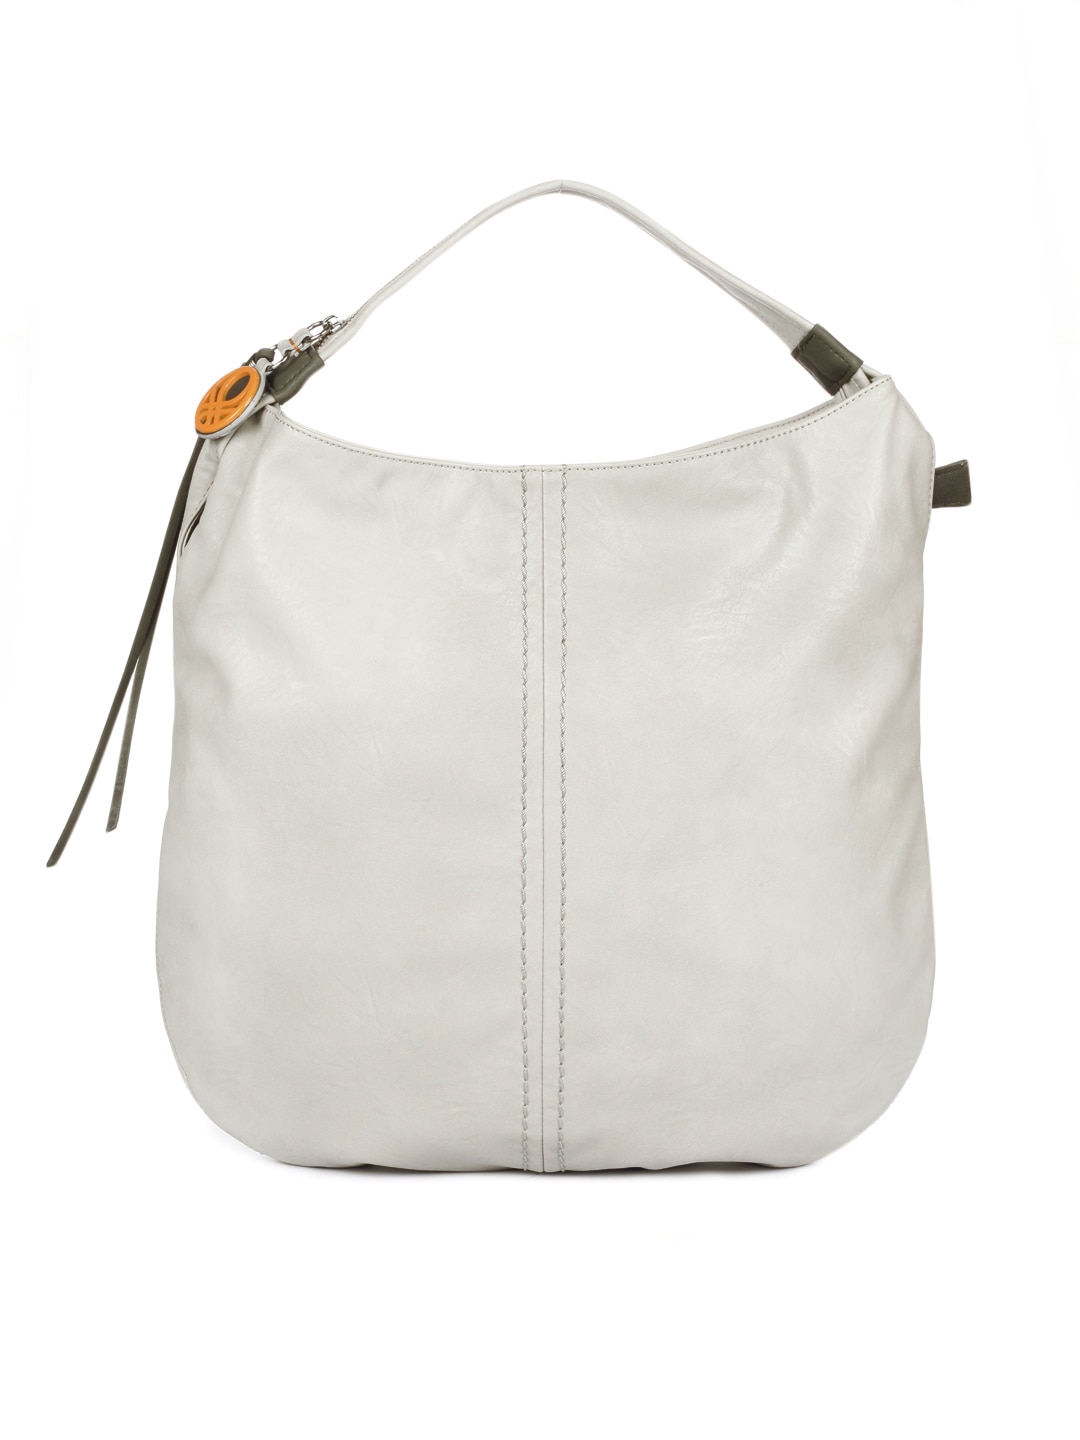 United Colors of Benetton Women Grey Bag